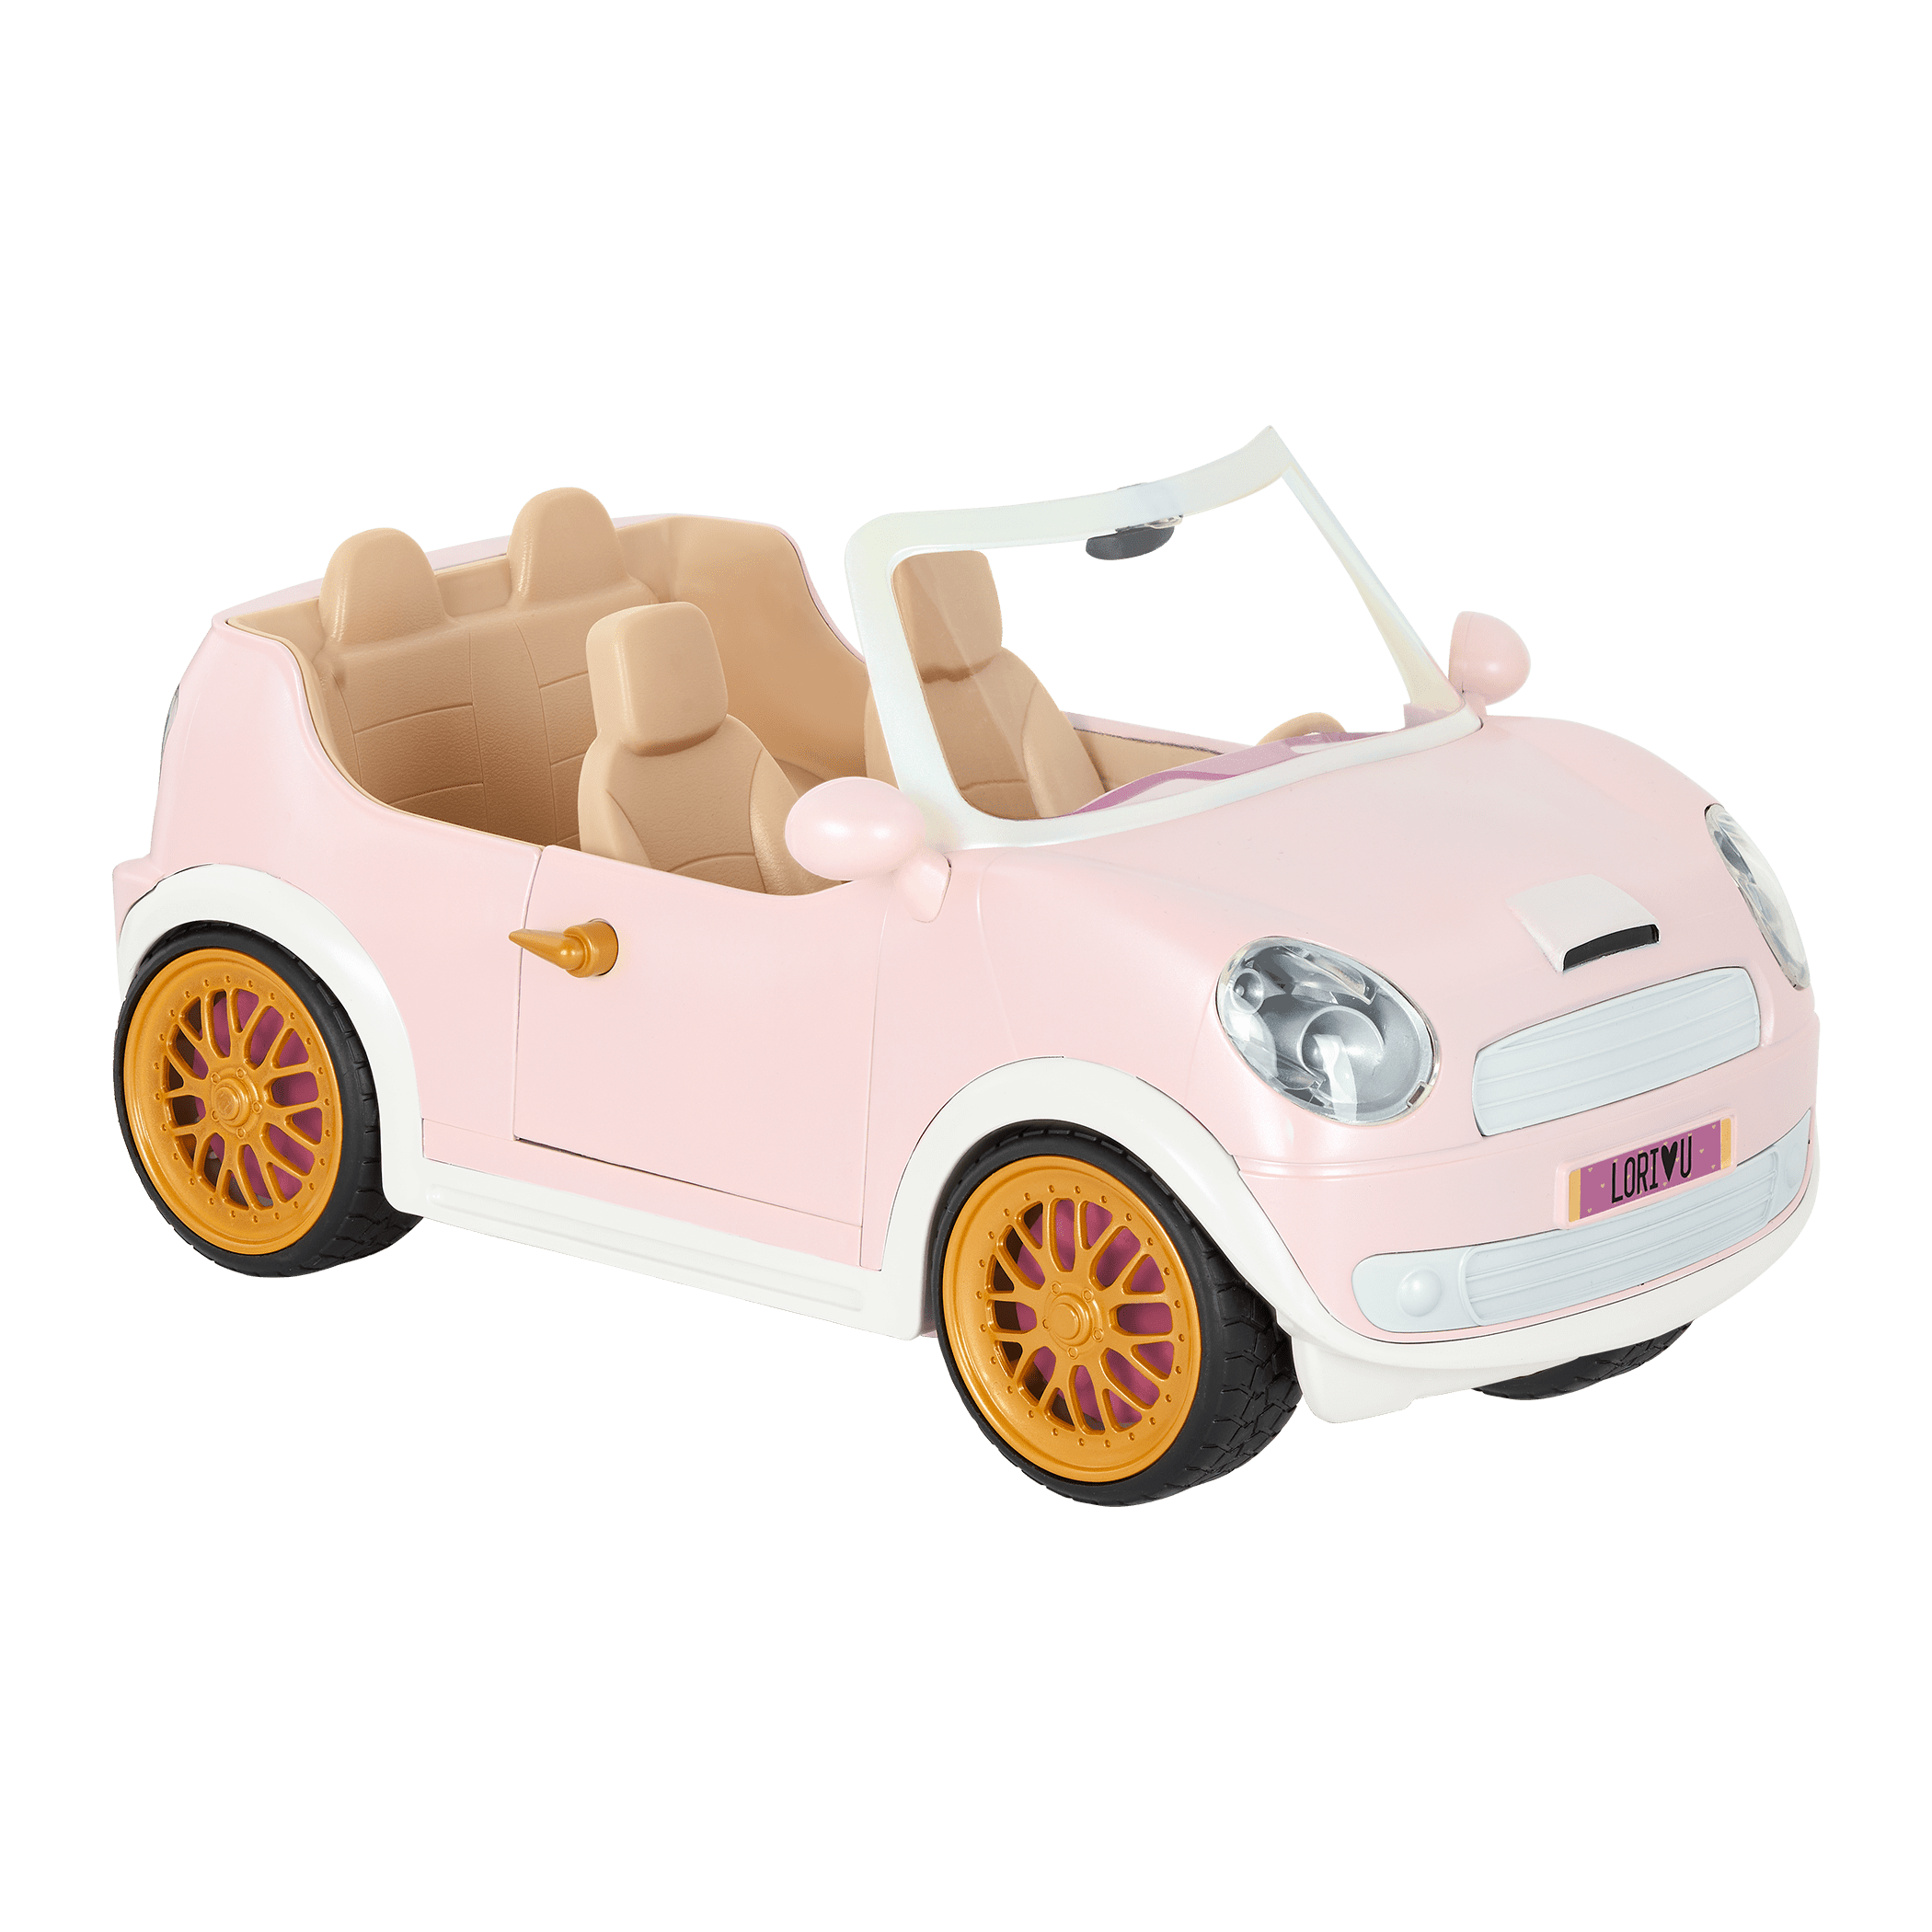 Go Everywhere! Convertible Car | Vehicle for Dolls | Lori